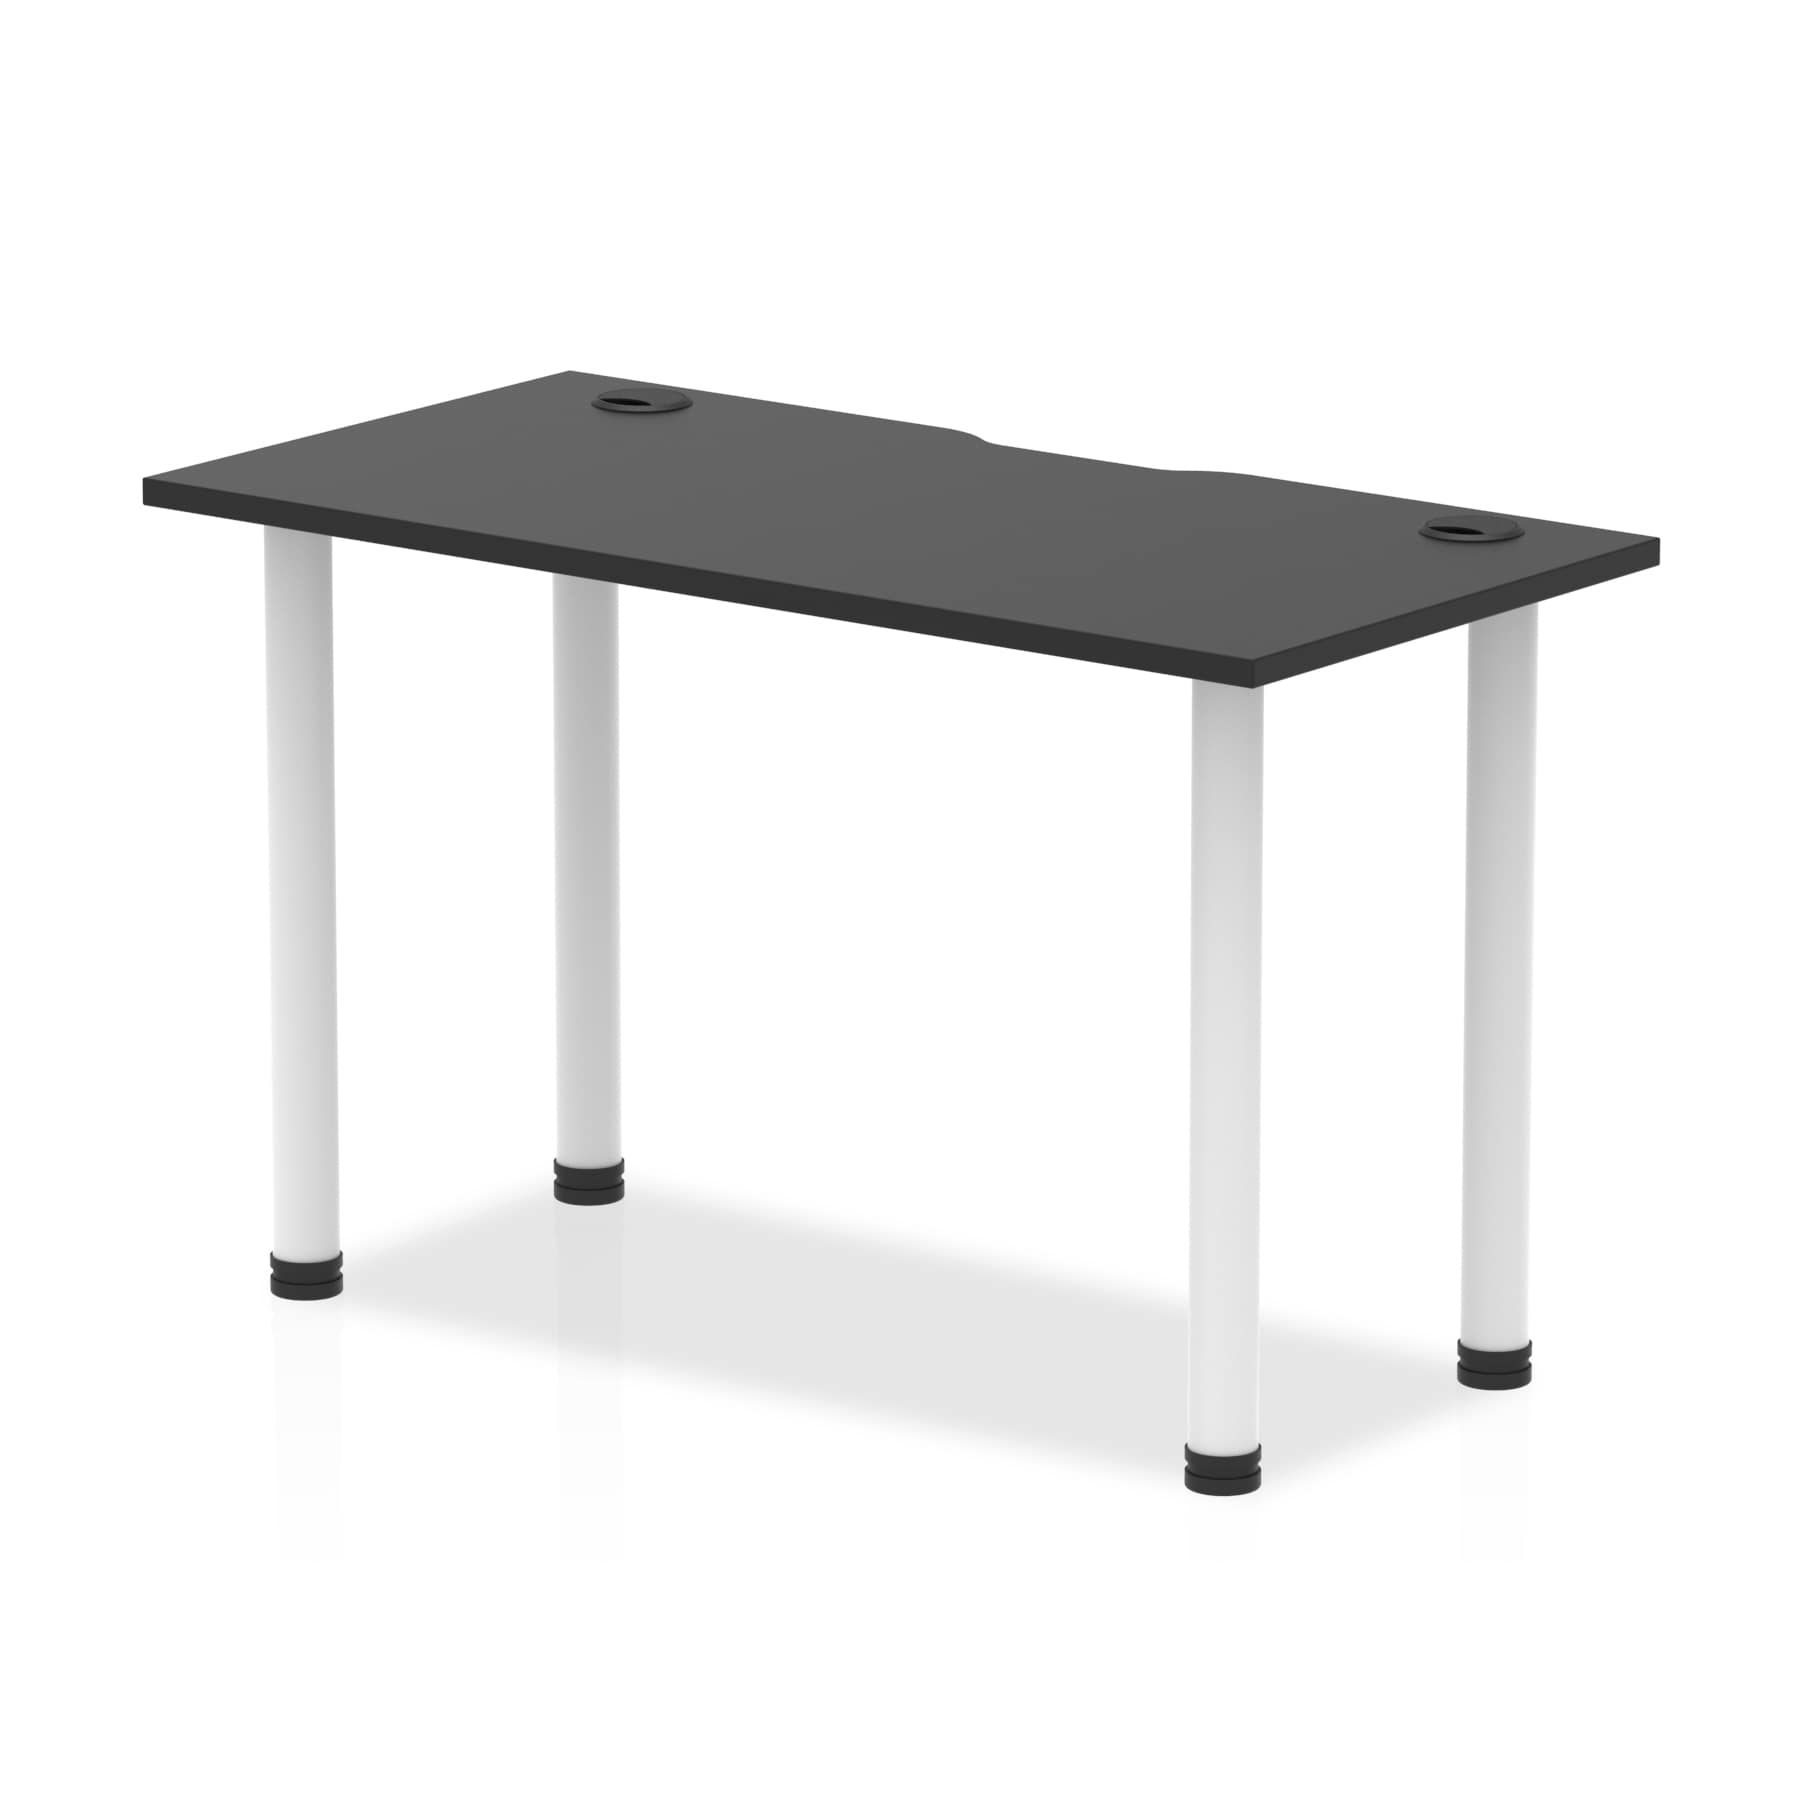 Impulse Black Series Slimline Straight Table - MFC Rectangular Desk, 5-Year Guarantee, Self-Assembly, Multiple Sizes & Frame Colors